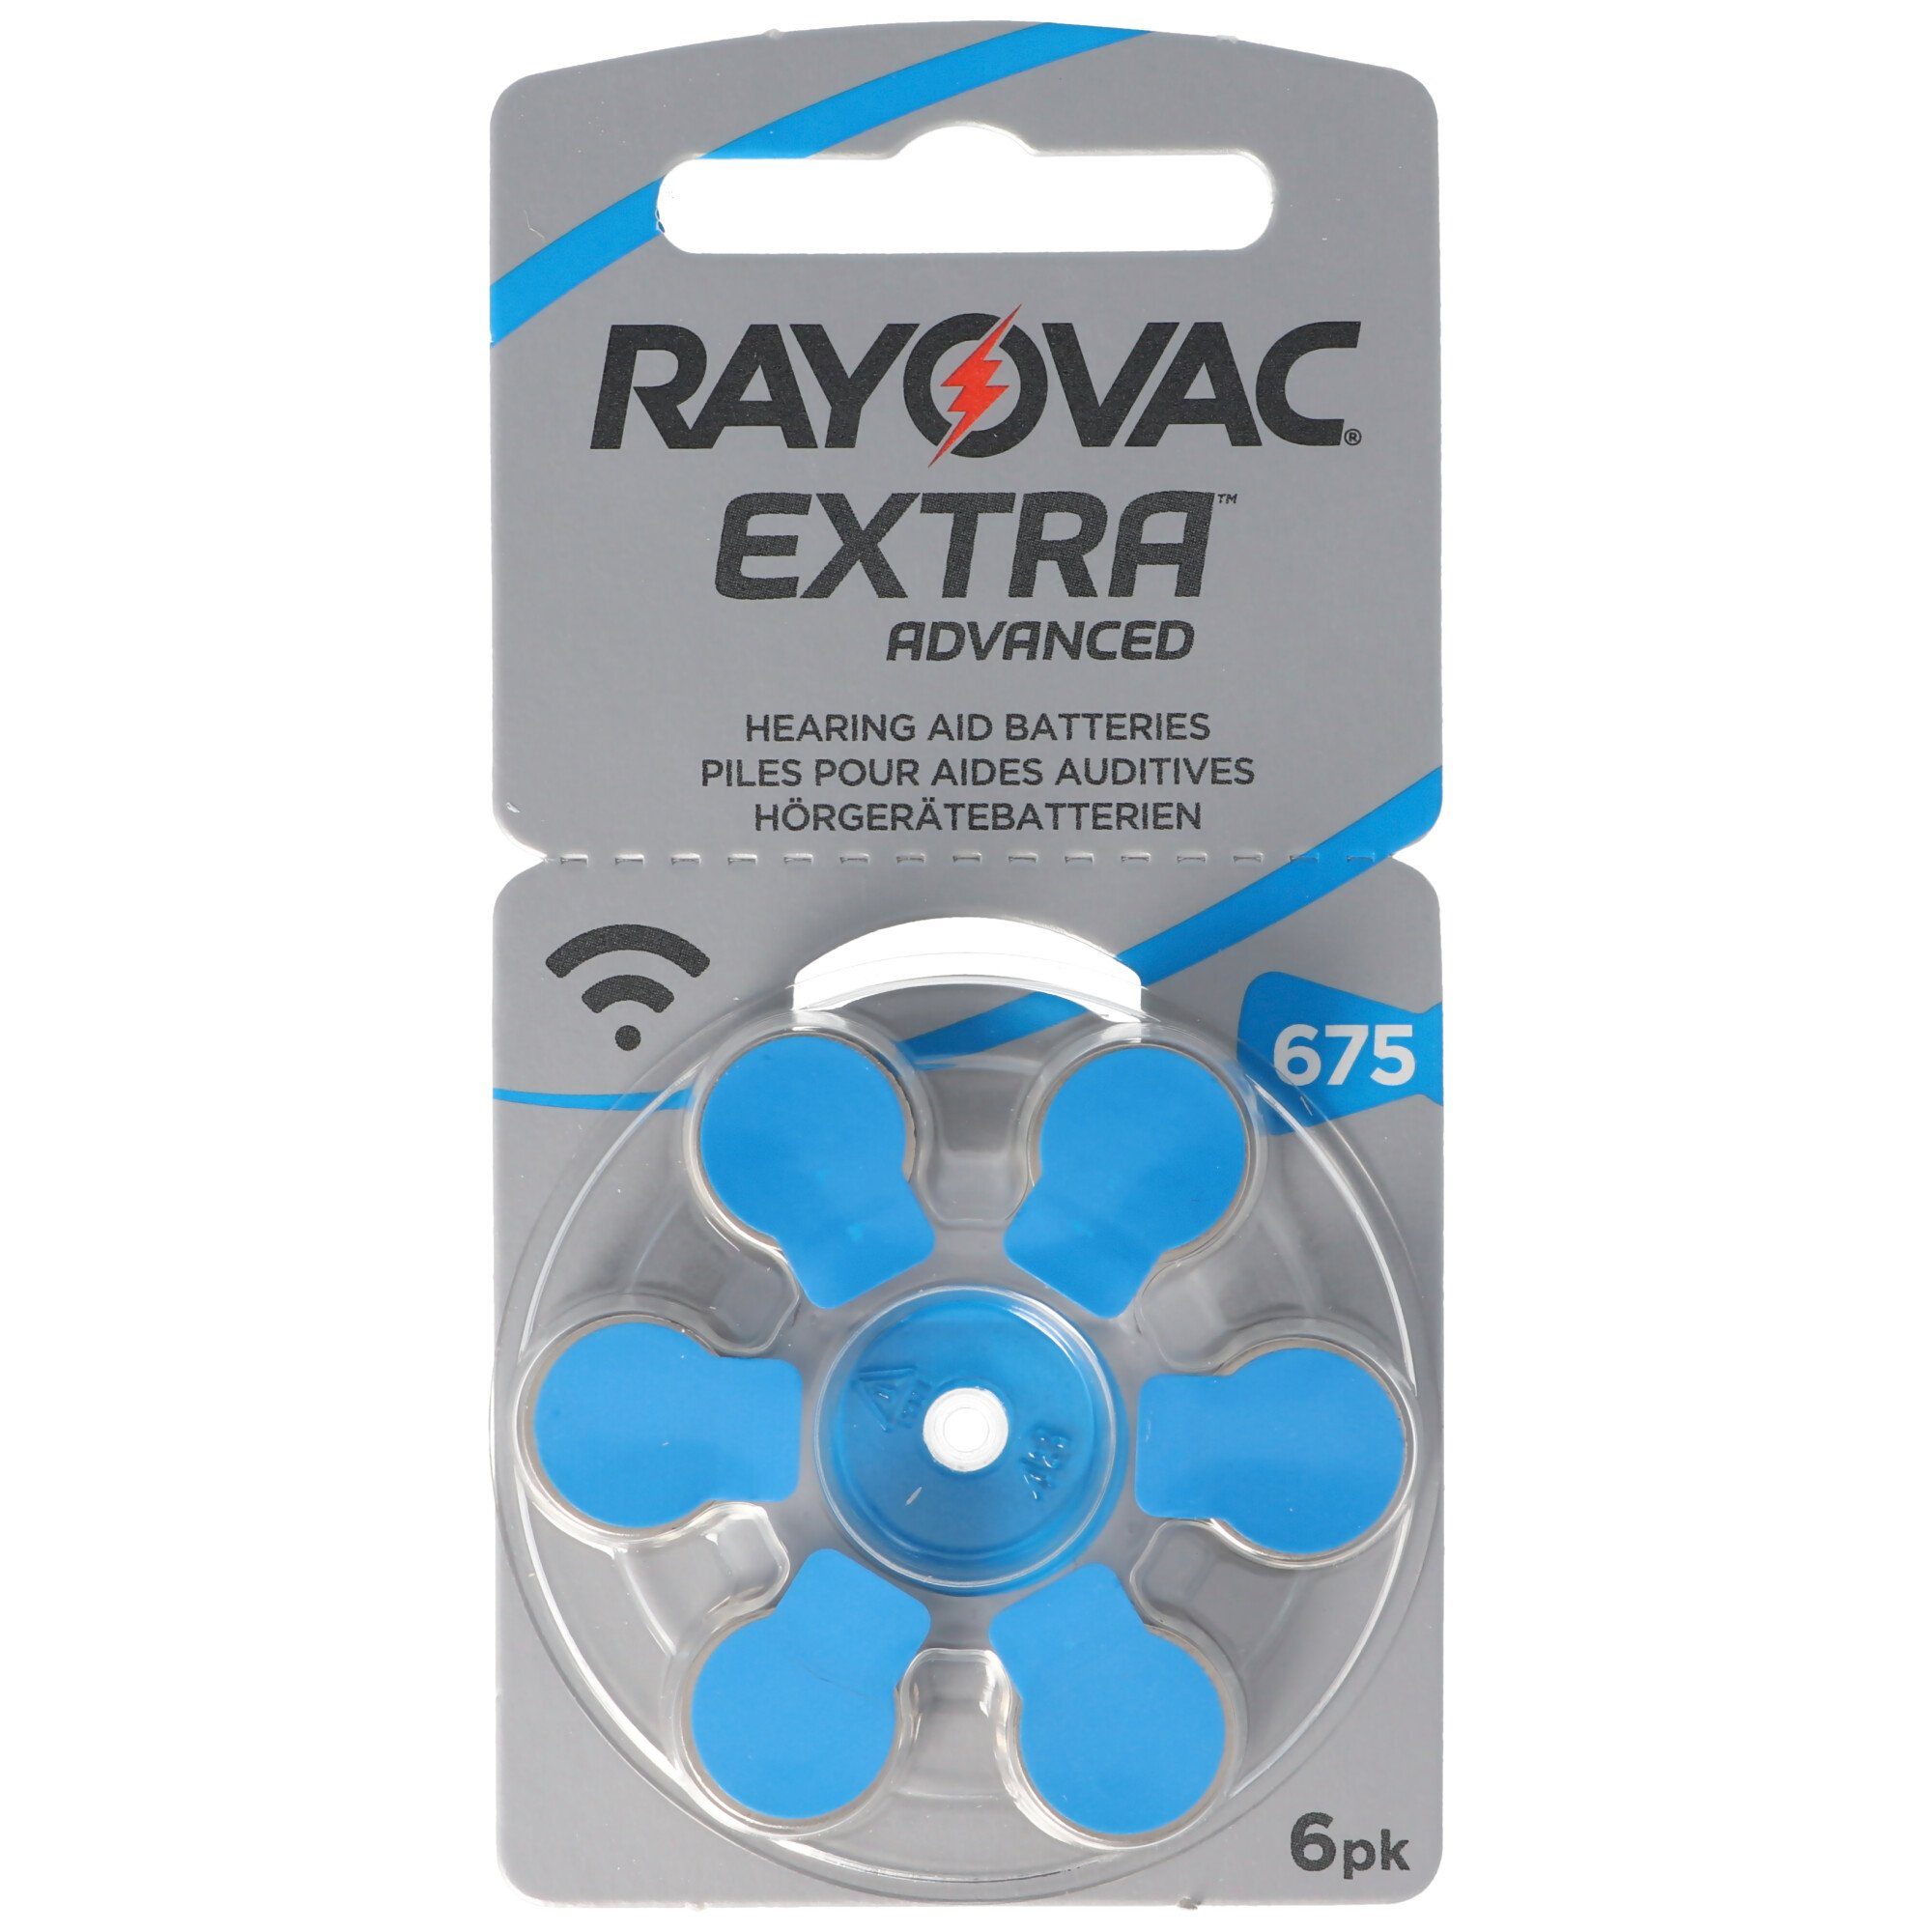 (1,4 Rayovac Extra Batterie, HA675, 4600, Hörgerätebatterie Advanced Acoustic PR44, V) RAYOVAC